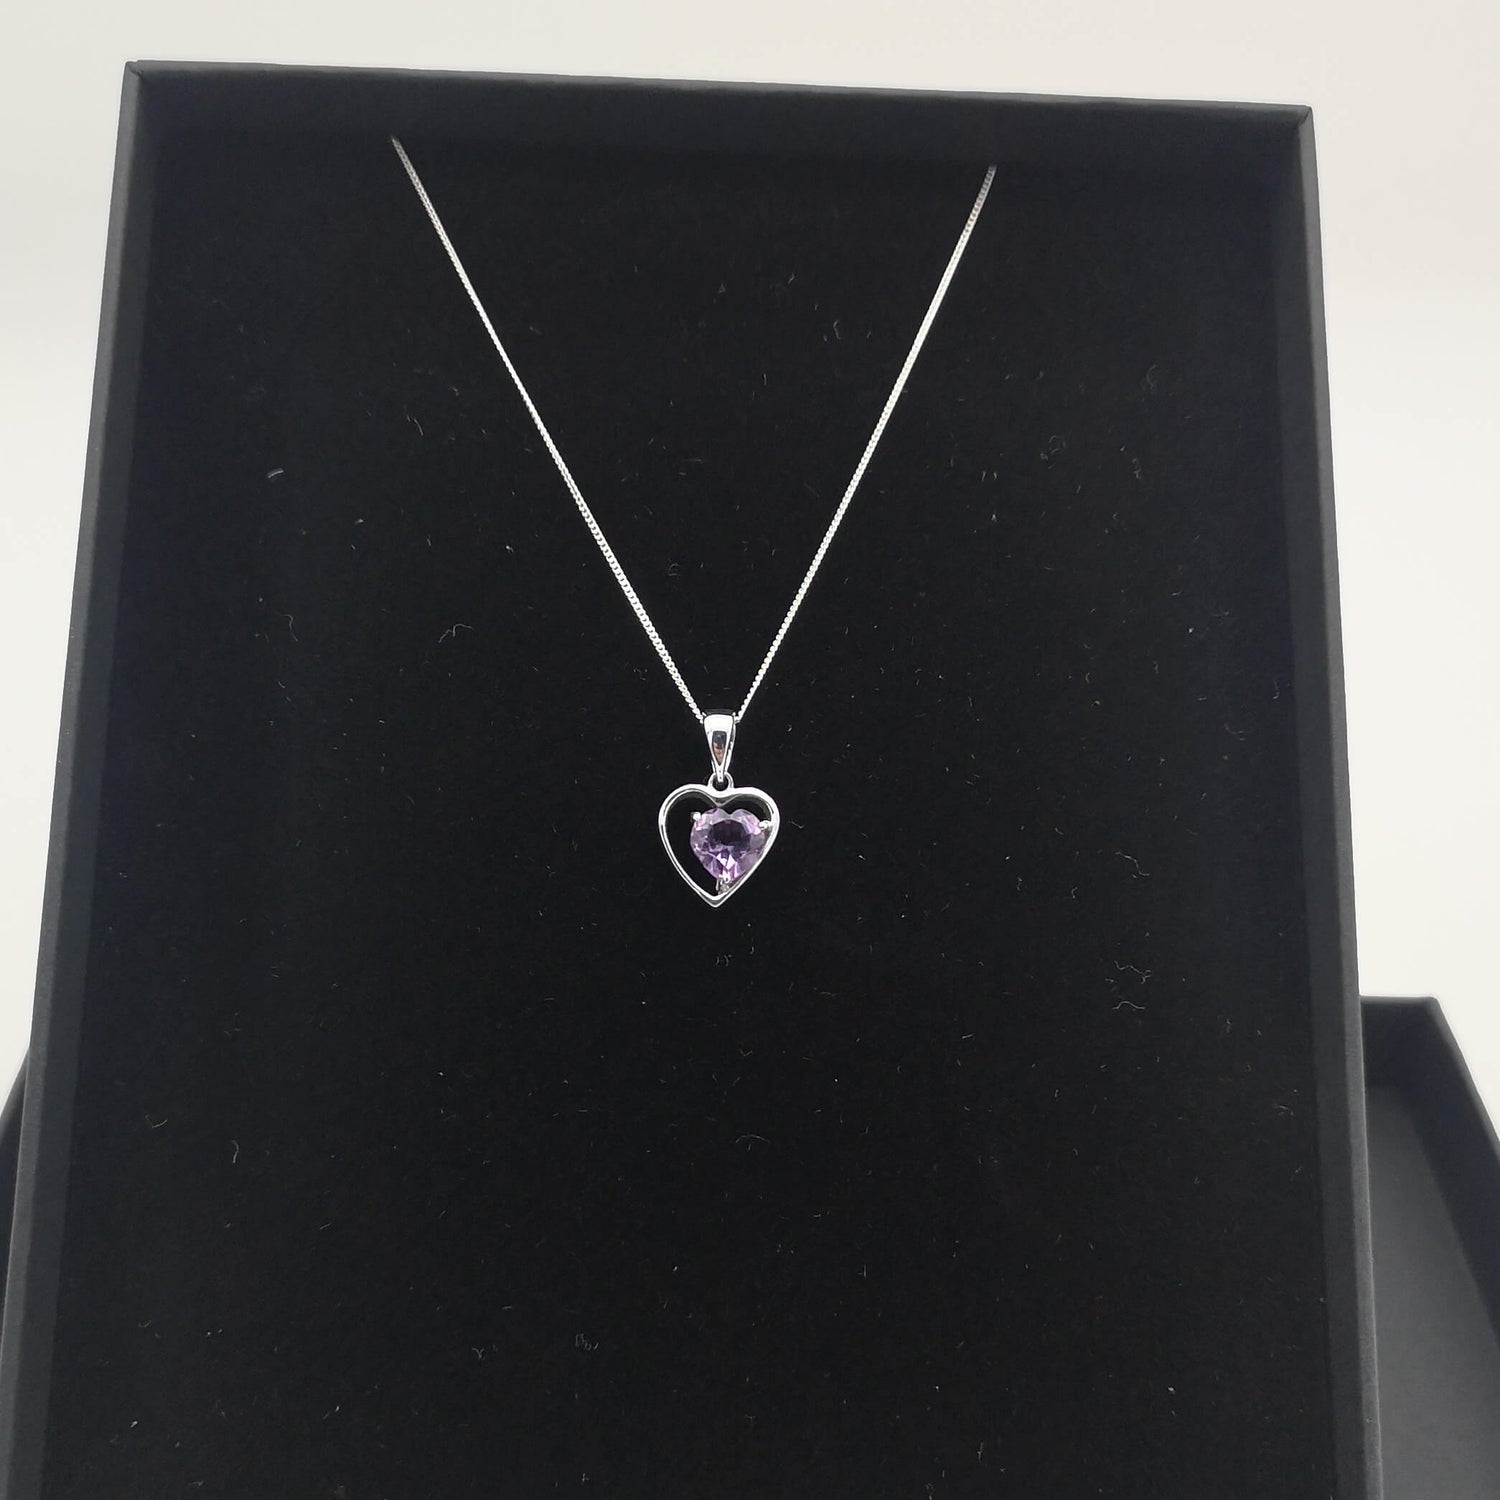 Sterling silver amethyst heart necklace in a black jewellery box